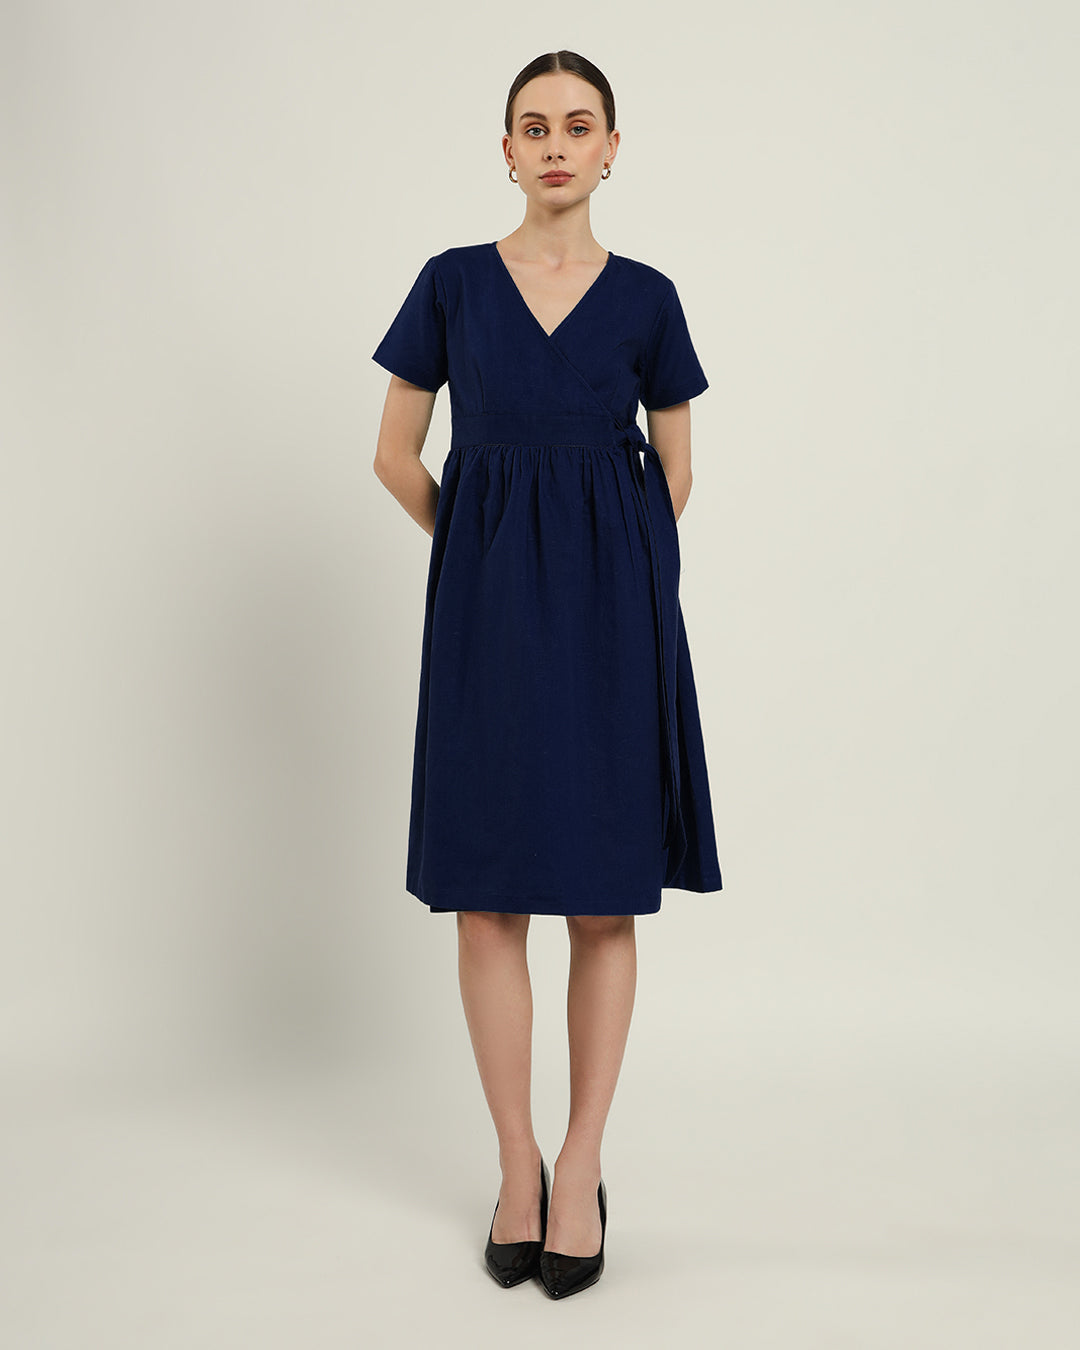 The Miyoshi Daisy Midnight Blue Linen Dress